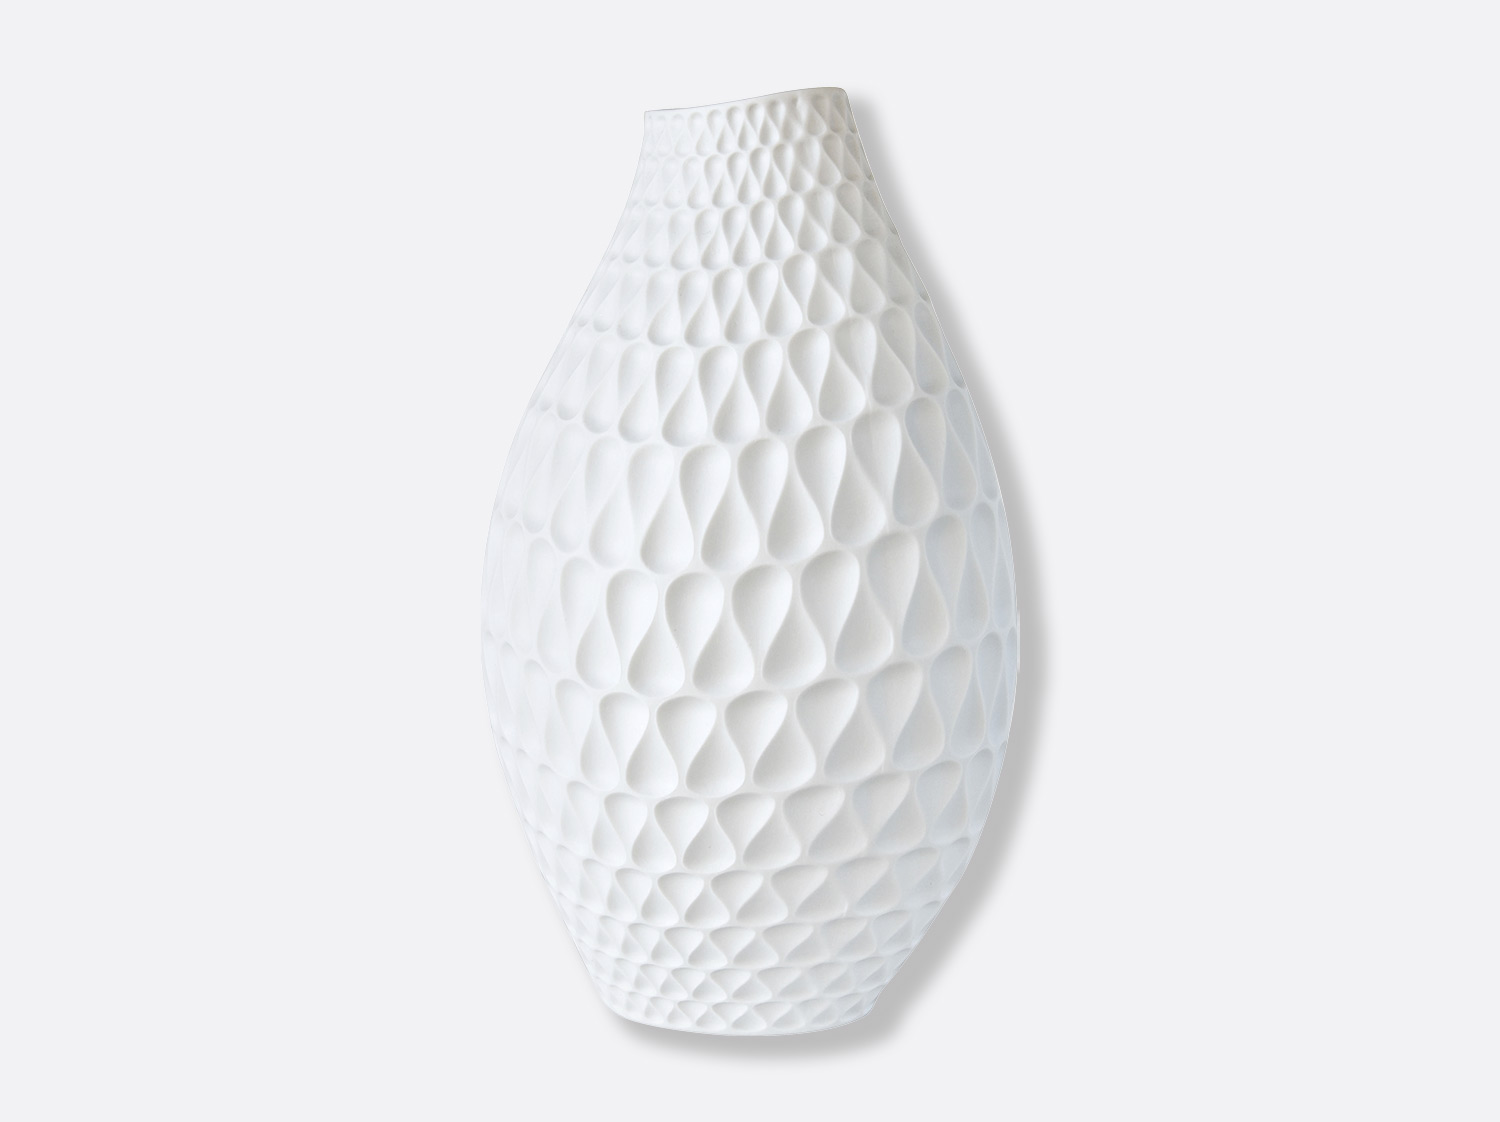 China Organic shape vase in bisque porcelain H. 11.8’’ of the collection Legende | Bernardaud